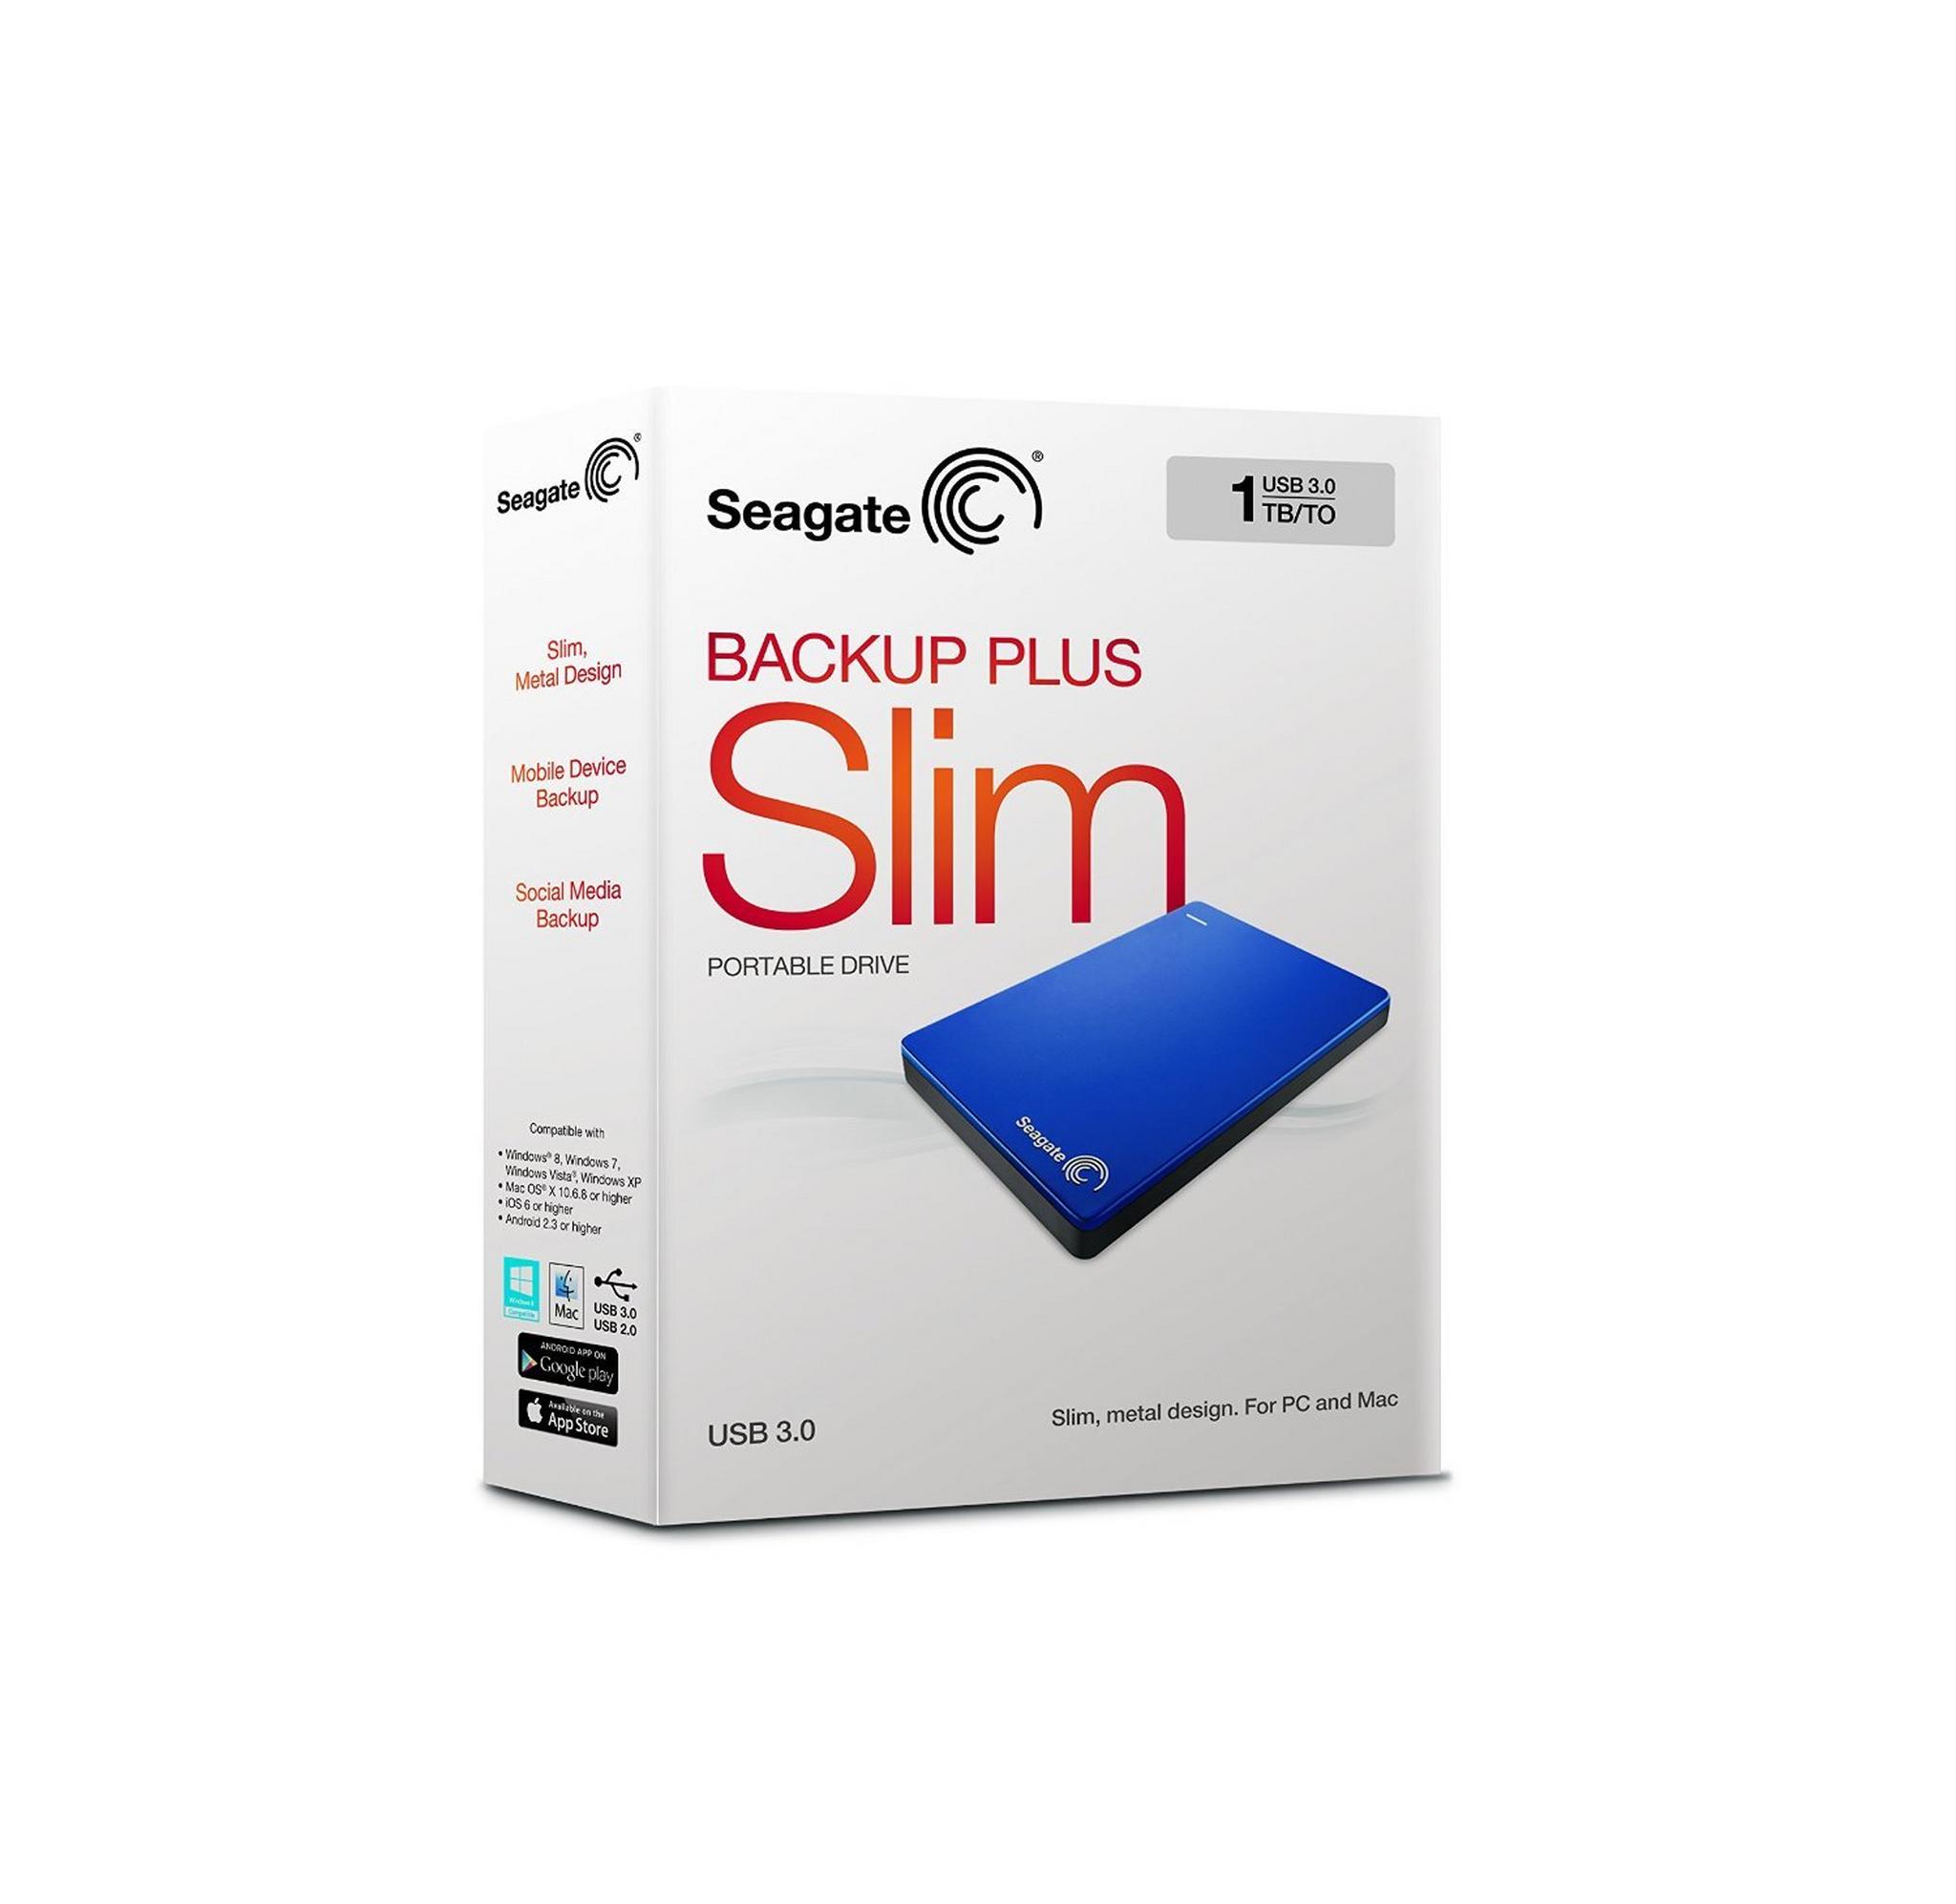 Seagate Back Up Plus 1TB Portable Hard Drive (STDR1000202) - Blue